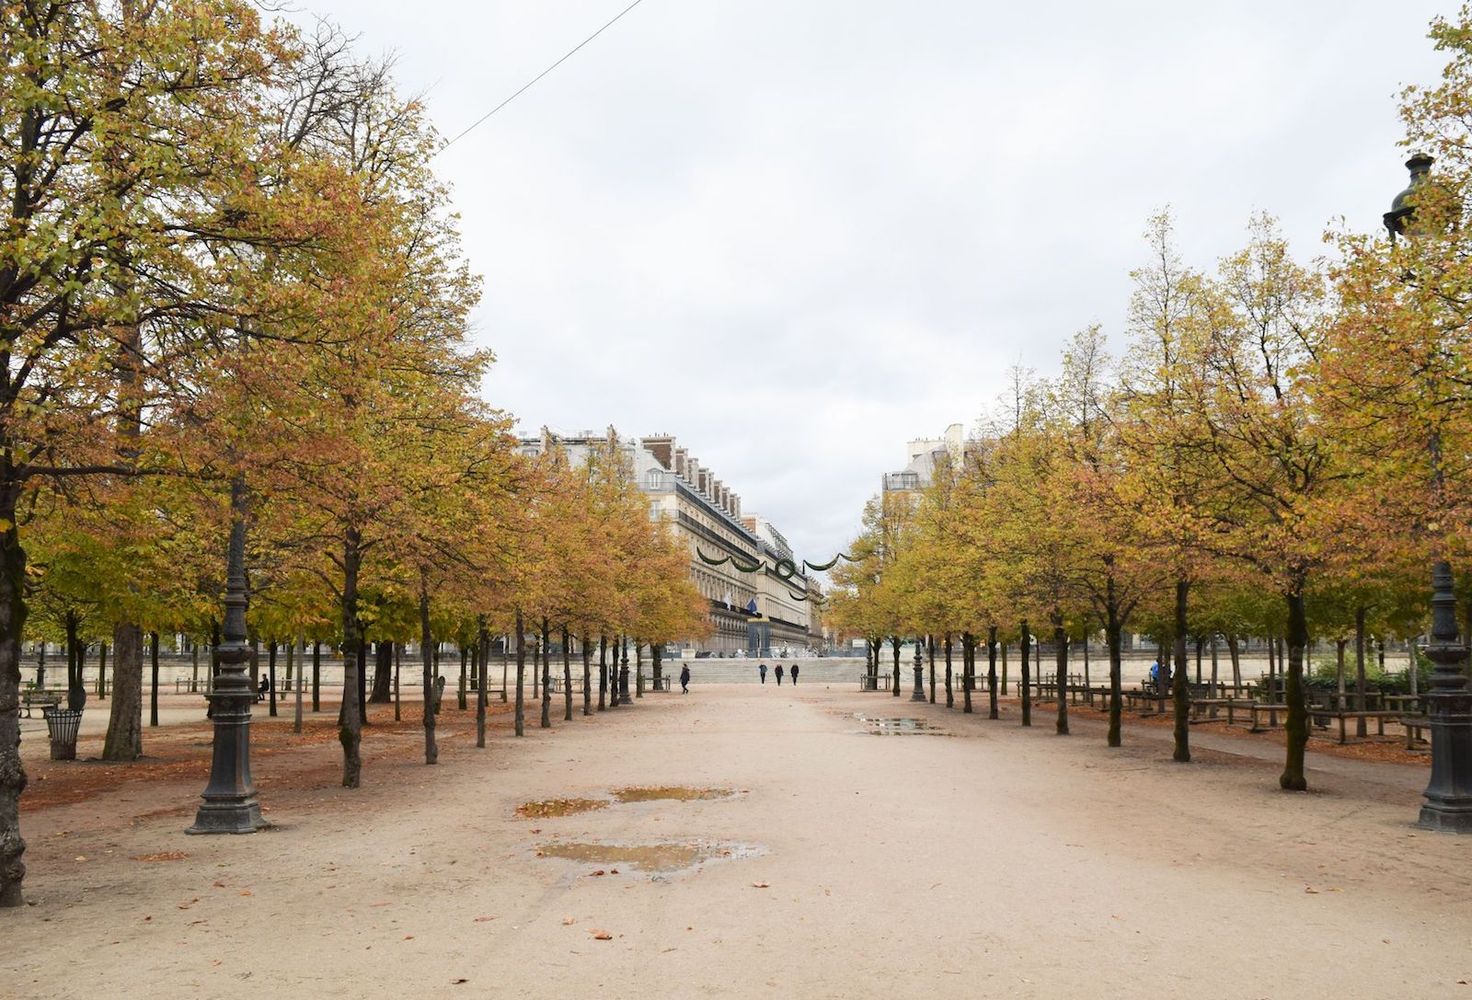 Jardin des Tuileries: a Formerly Royal Park in Paris